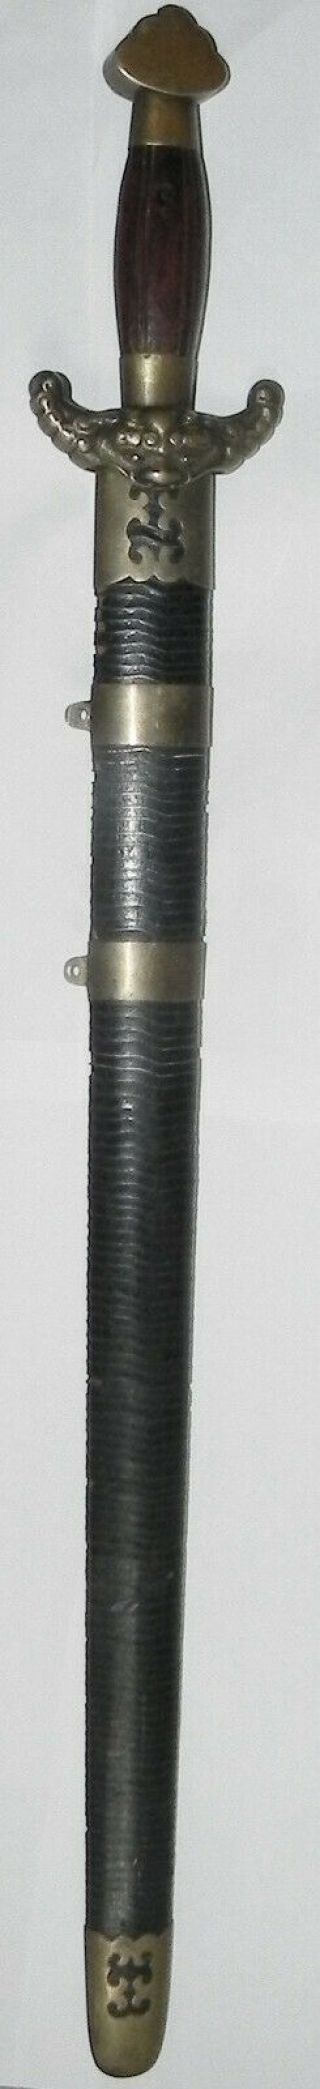 Antique 19th C.  Qing Dynasty Chinese Jian Short Sword.